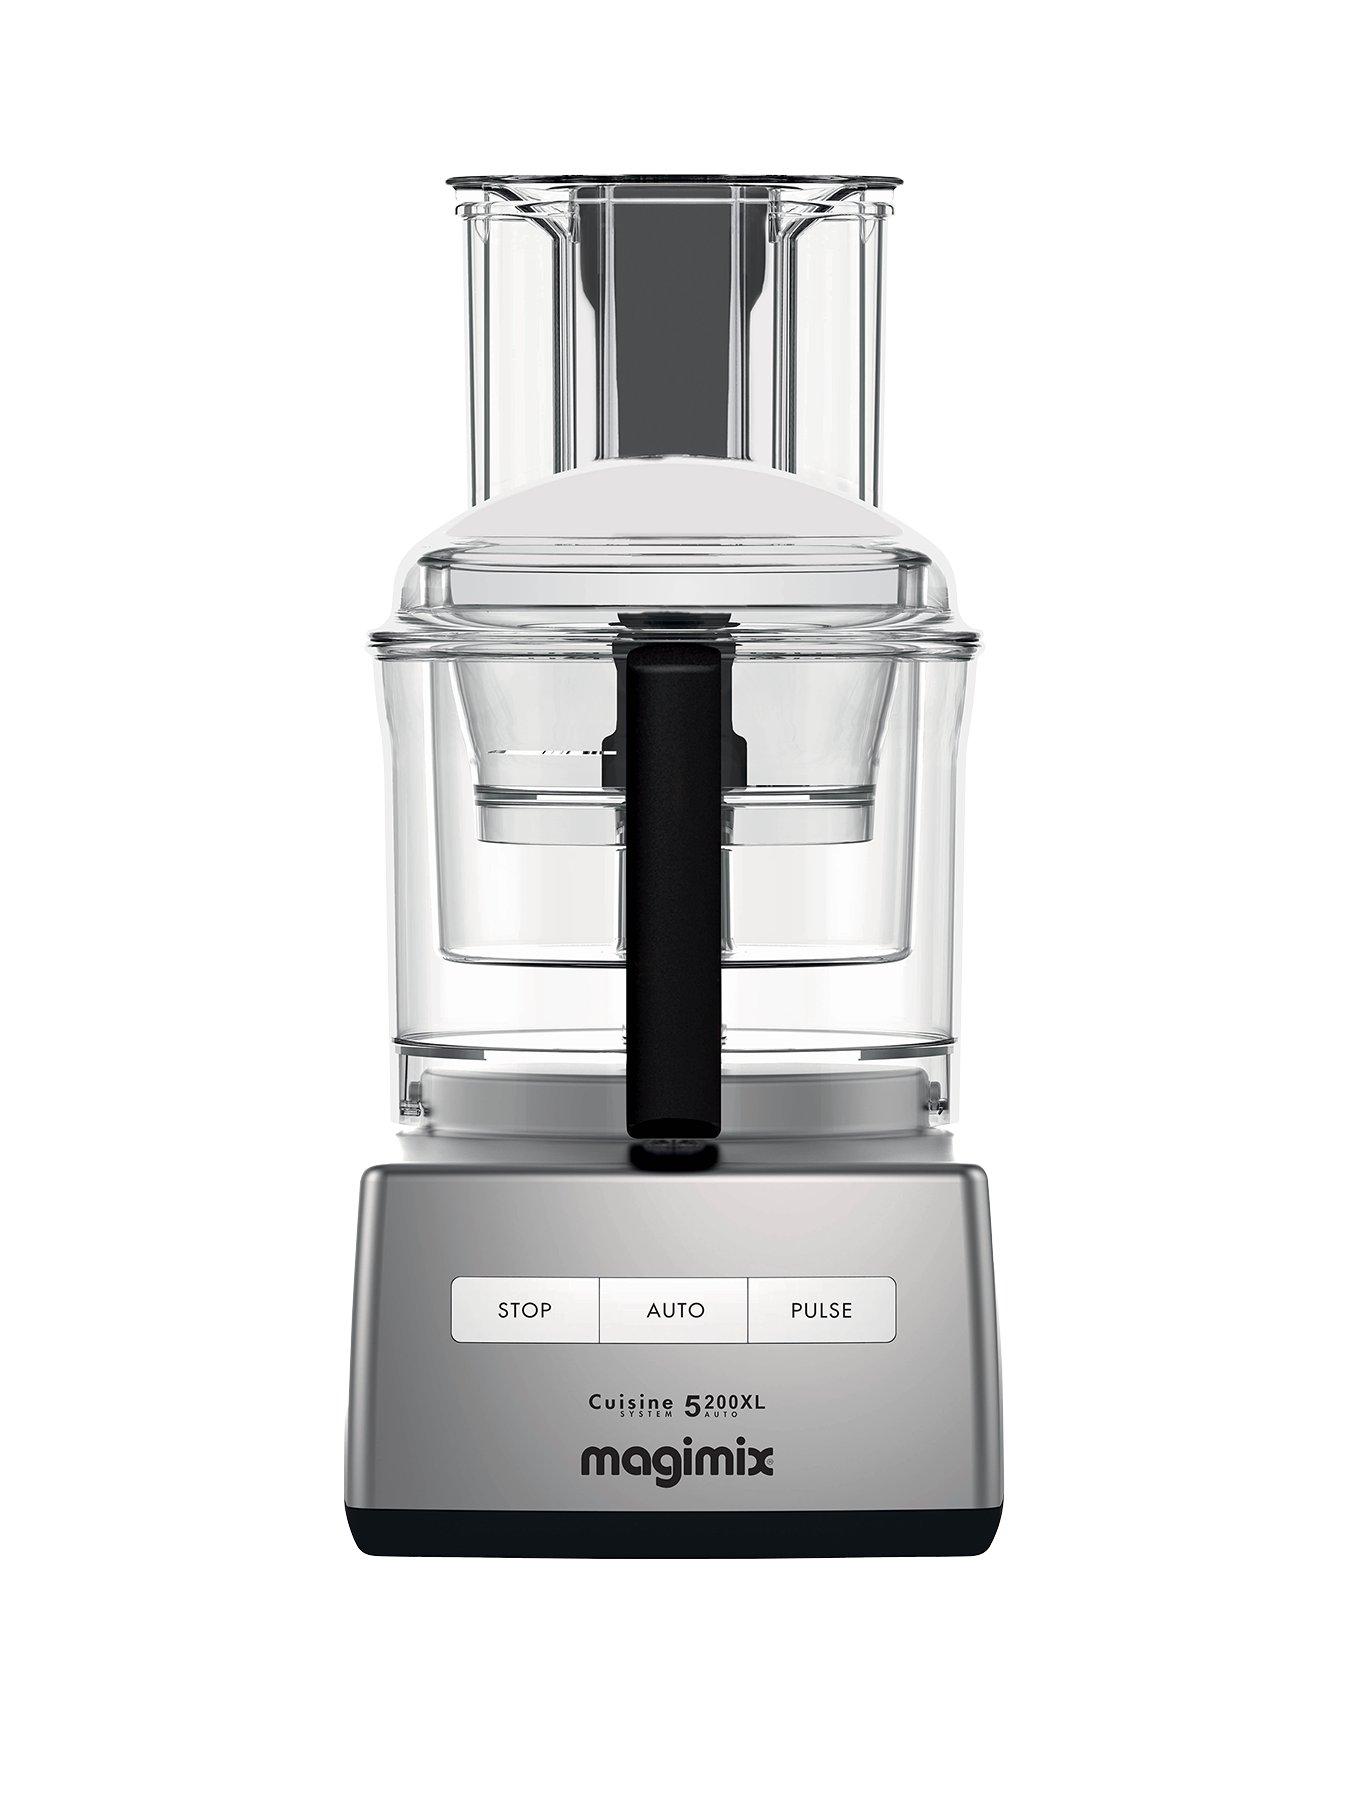 Magimix Cuisine Systeme 5200Xl Food Processor – Satin